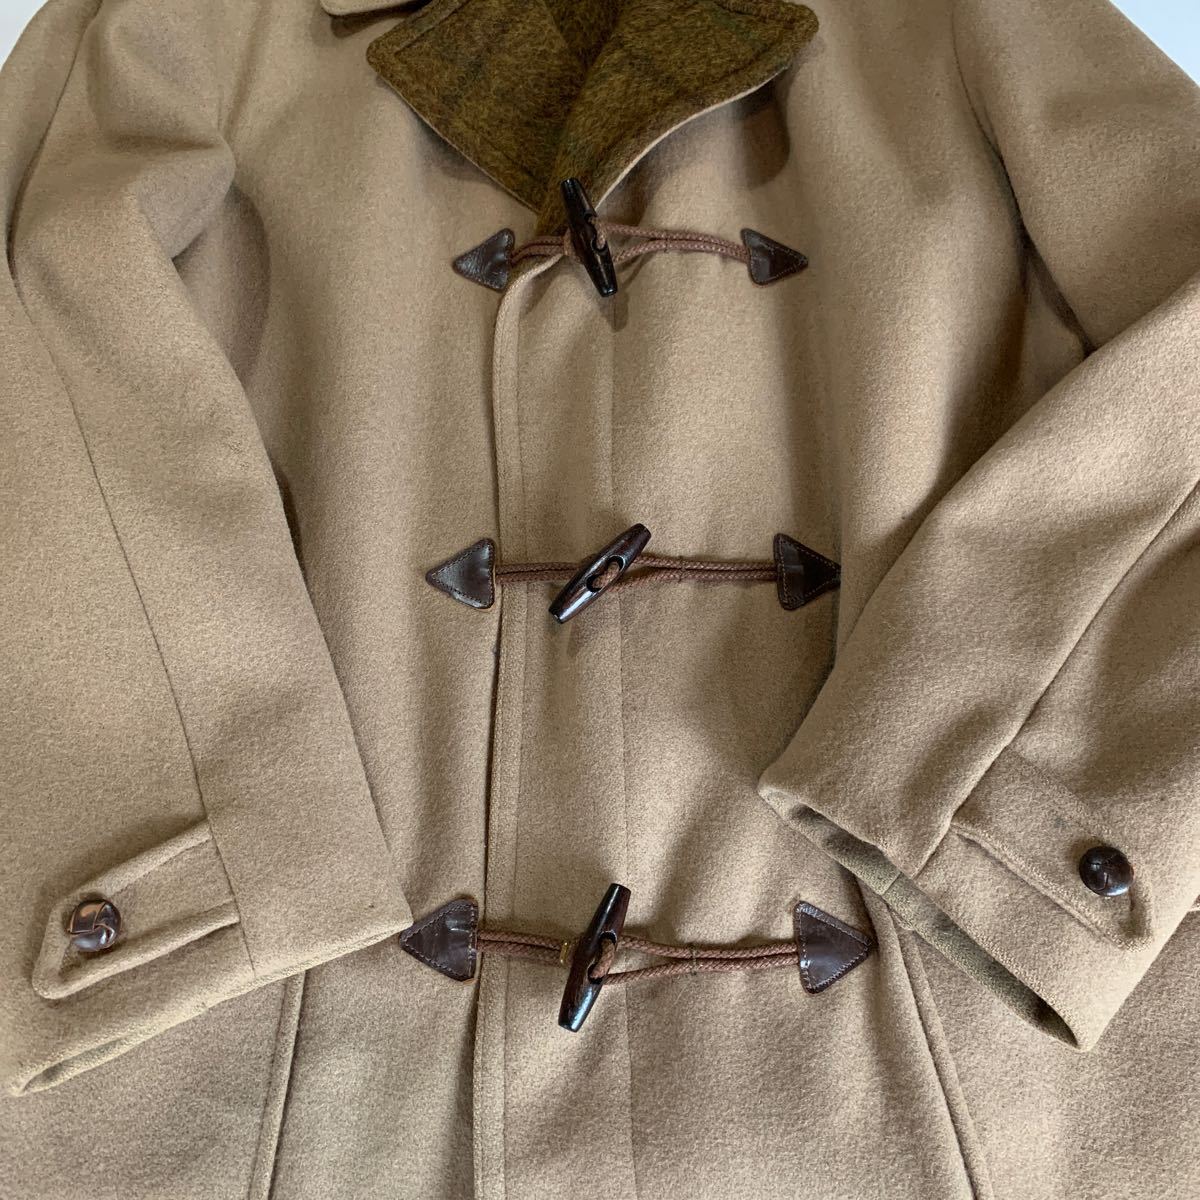 60s Lakeland WOOL DUFFLE COAT Vintage Vintage wool coat duffle coat check liner Ame tiger chin strap 50s